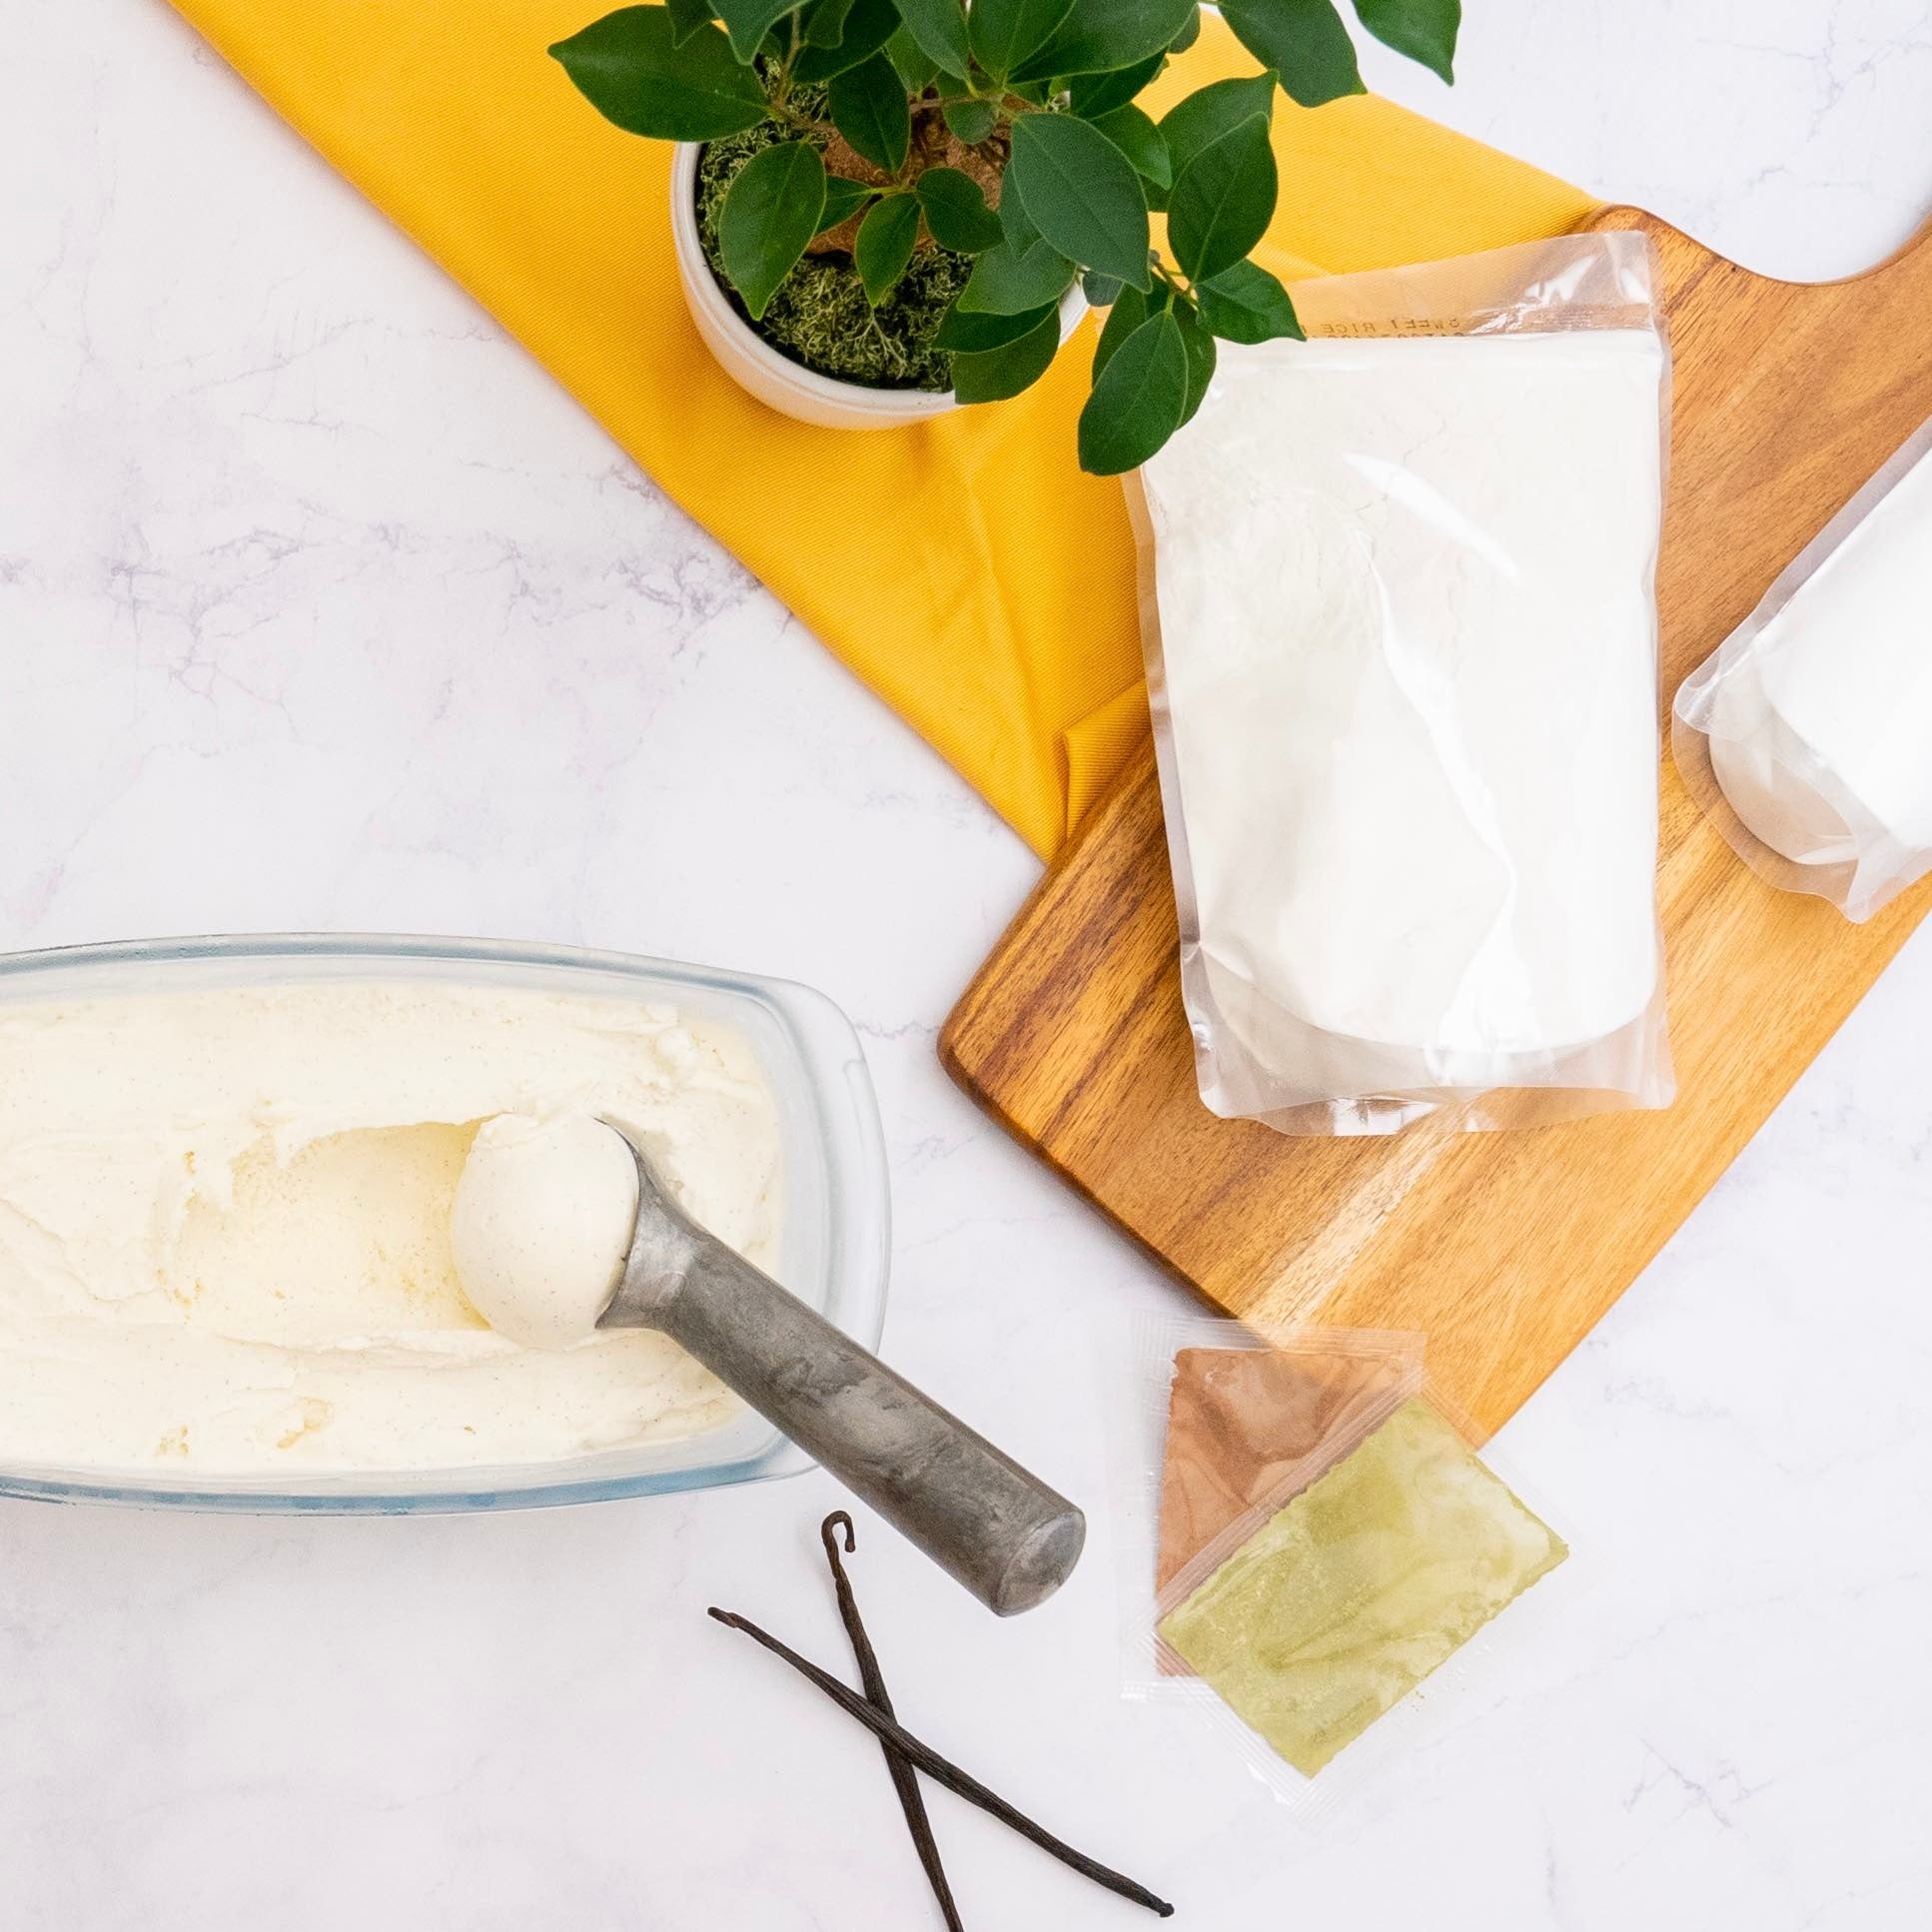 Global Grub Mochi Ice Cream Kit Make It Yourself Cooking Adventure